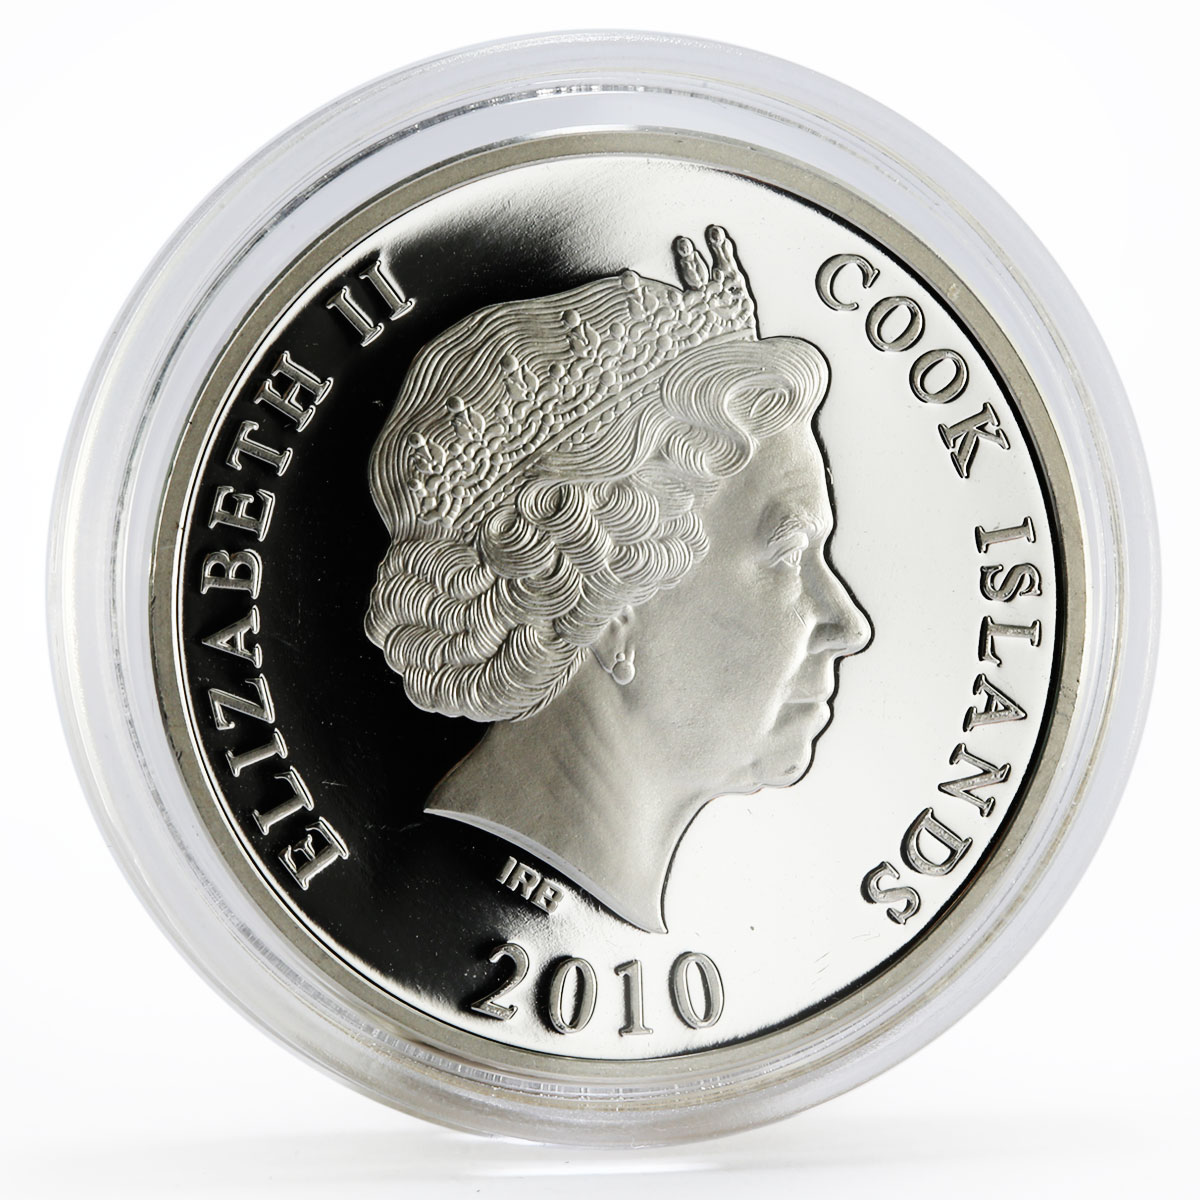 Cook Islands 10 dollars World Monuments series Belgium Atomium silver coin 2010